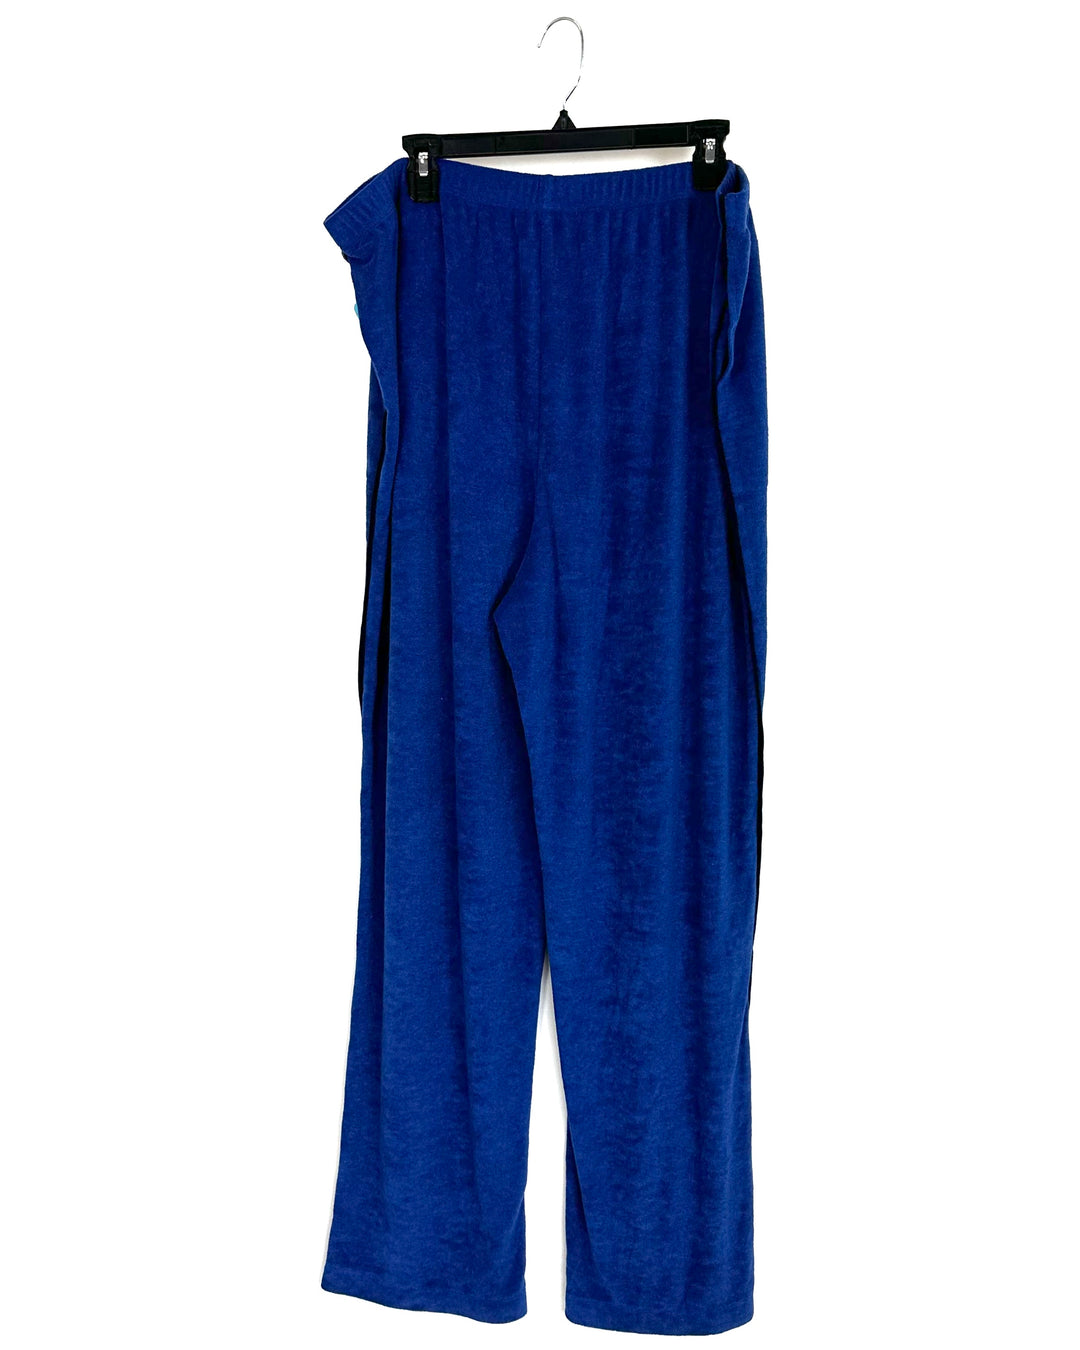 Blue Terry Cloth Pants - 1X